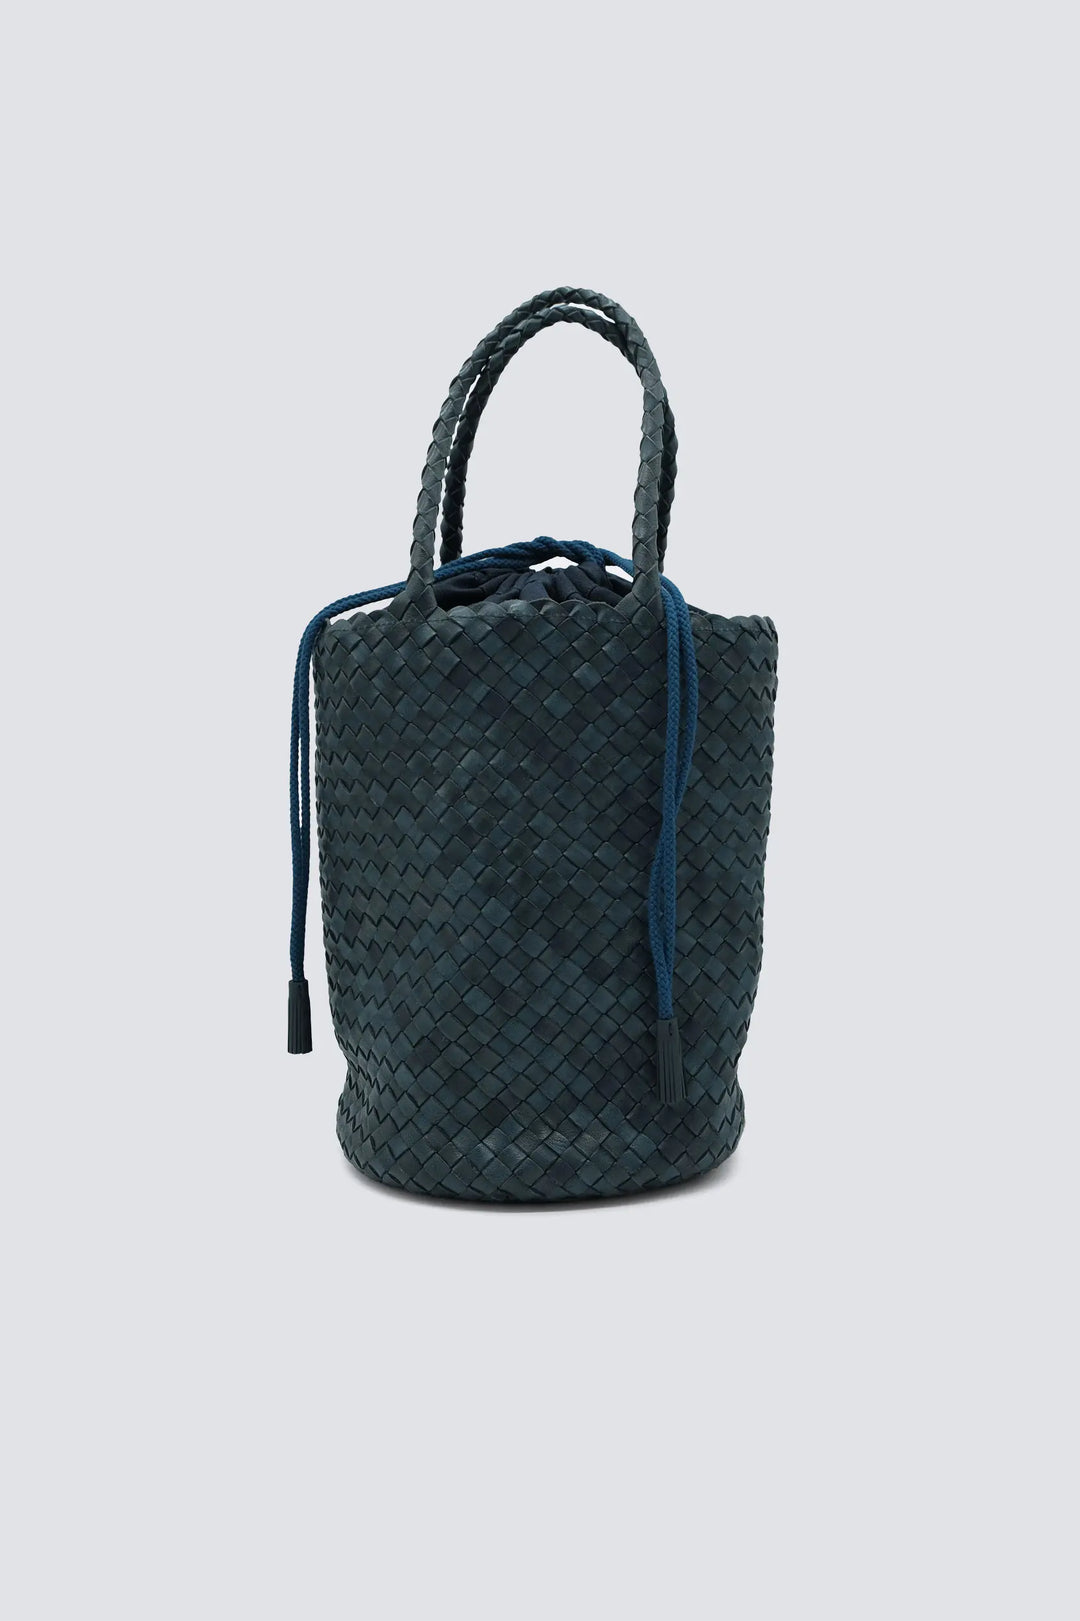 Dragon Diffusion - Woven Leather Bag Handmade - Jacky Bucket Marine